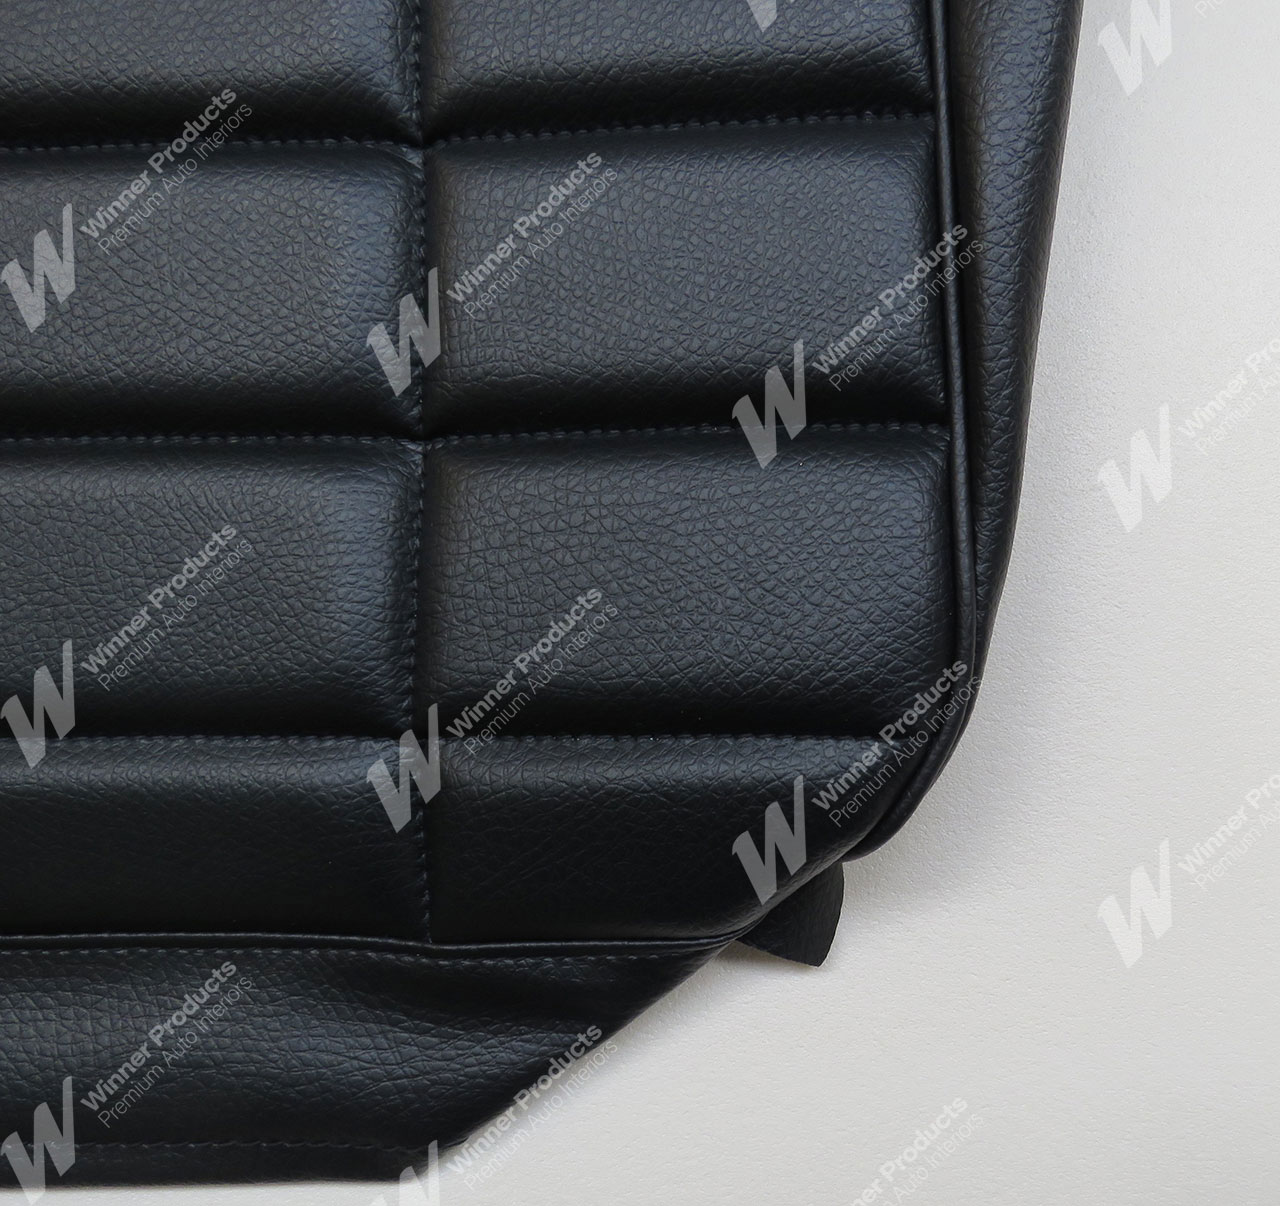 Holden Monaro HG Monaro Coupe 10X Black Seat Covers (Image 4 of 4)